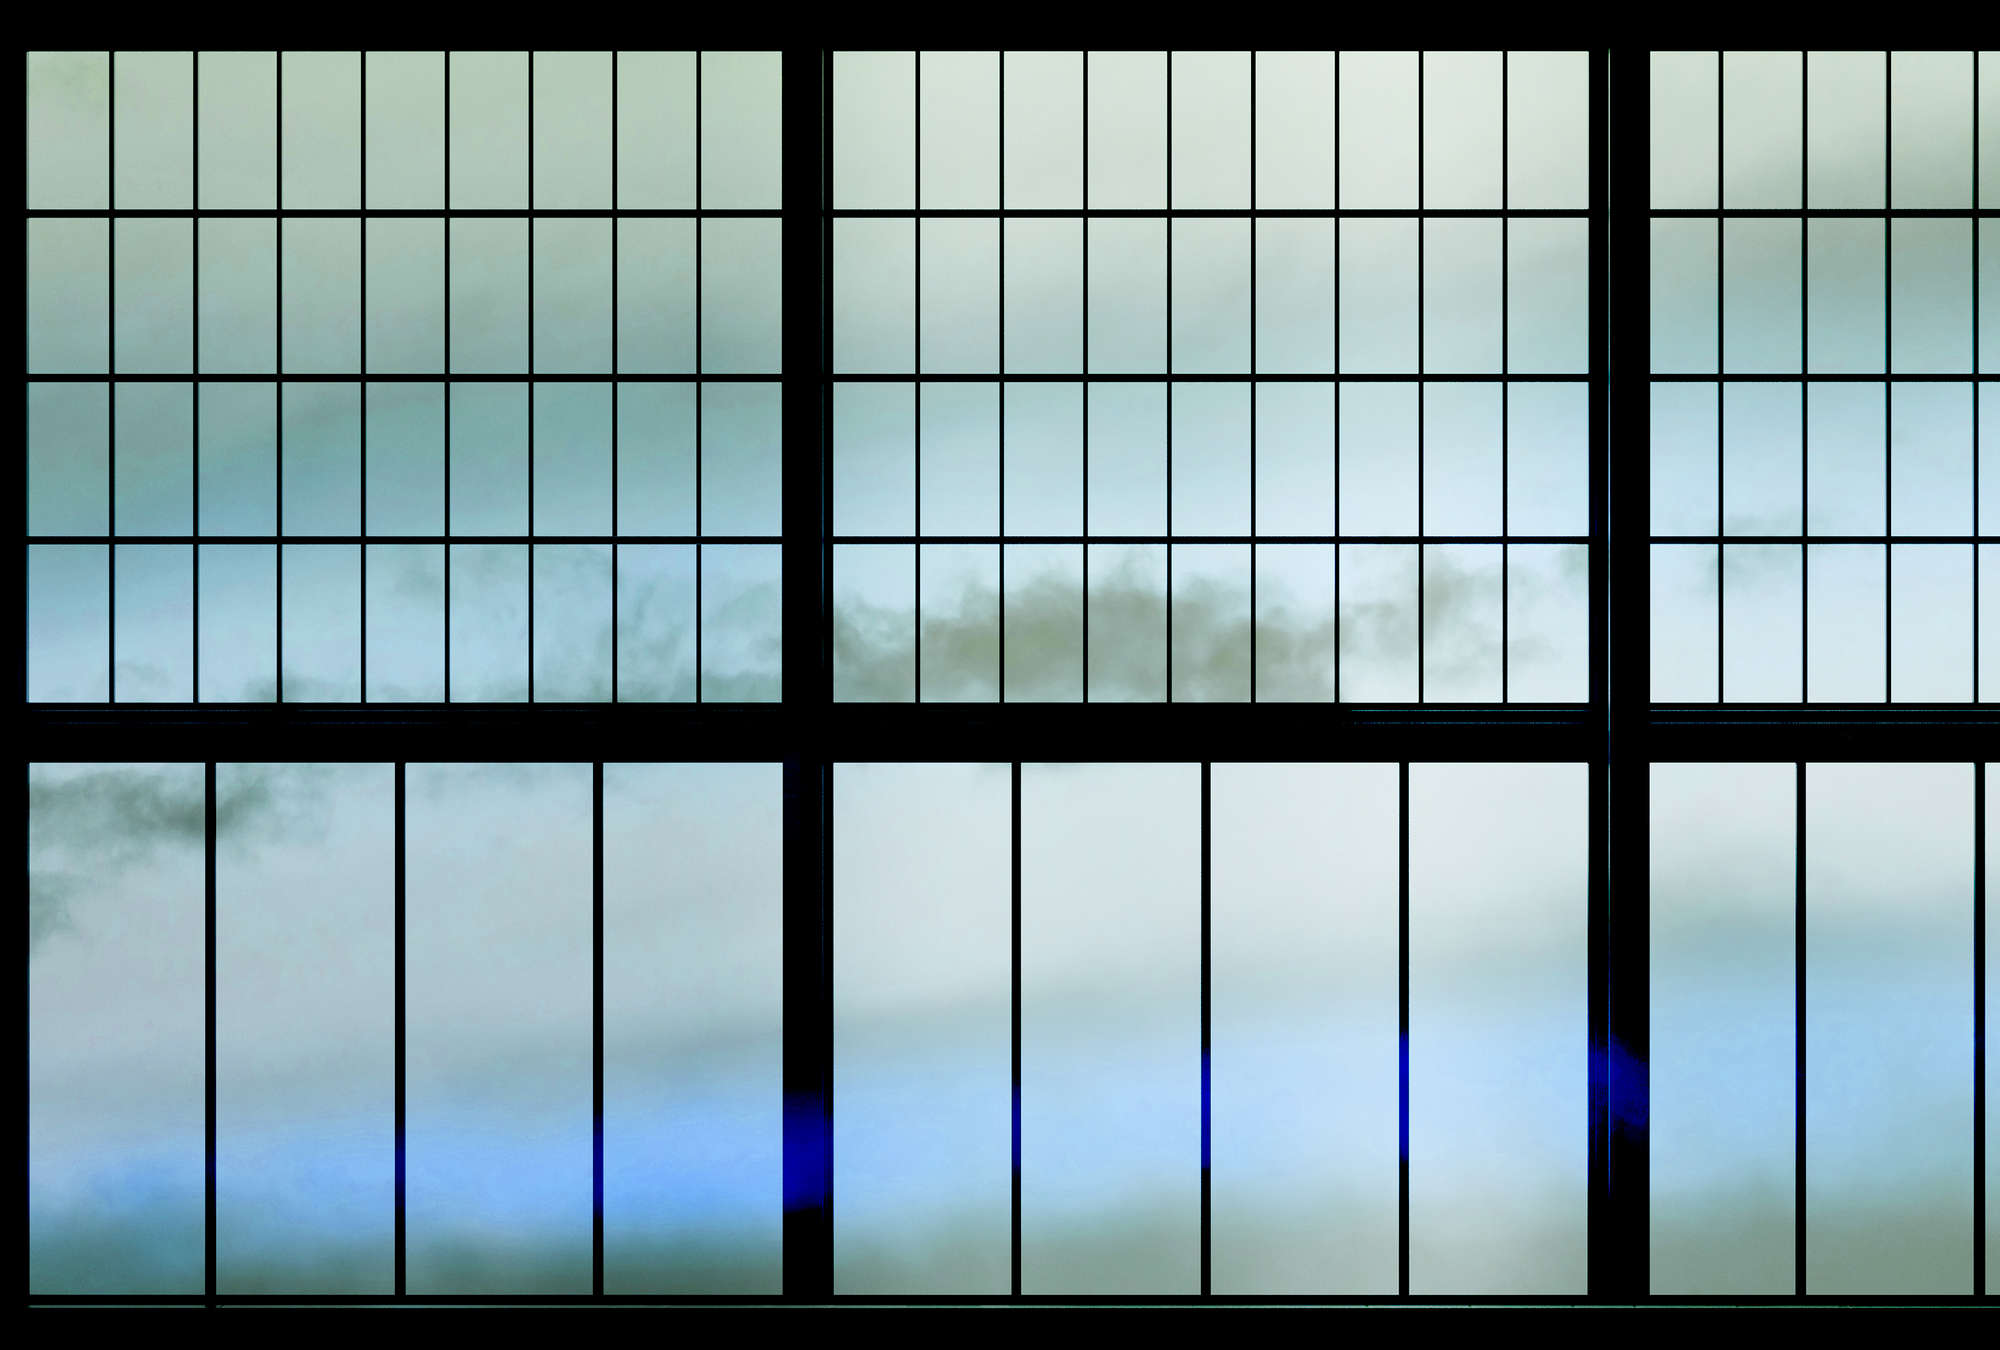             Sky 3 - Muntin Window with Cloudy Sky Wallpaper - Blue, Black | Matt Smooth Non-woven
        